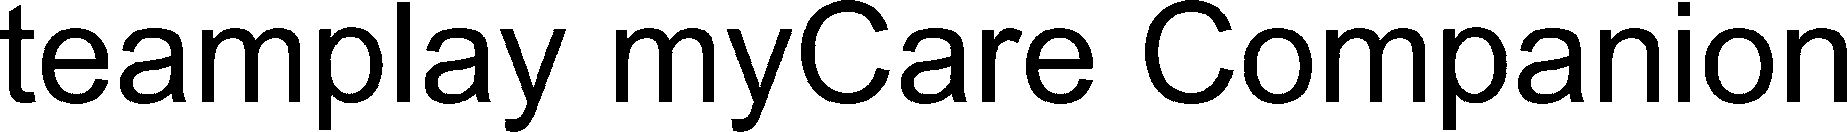 Trademark Logo TEAMPLAY MYCARE COMPANION